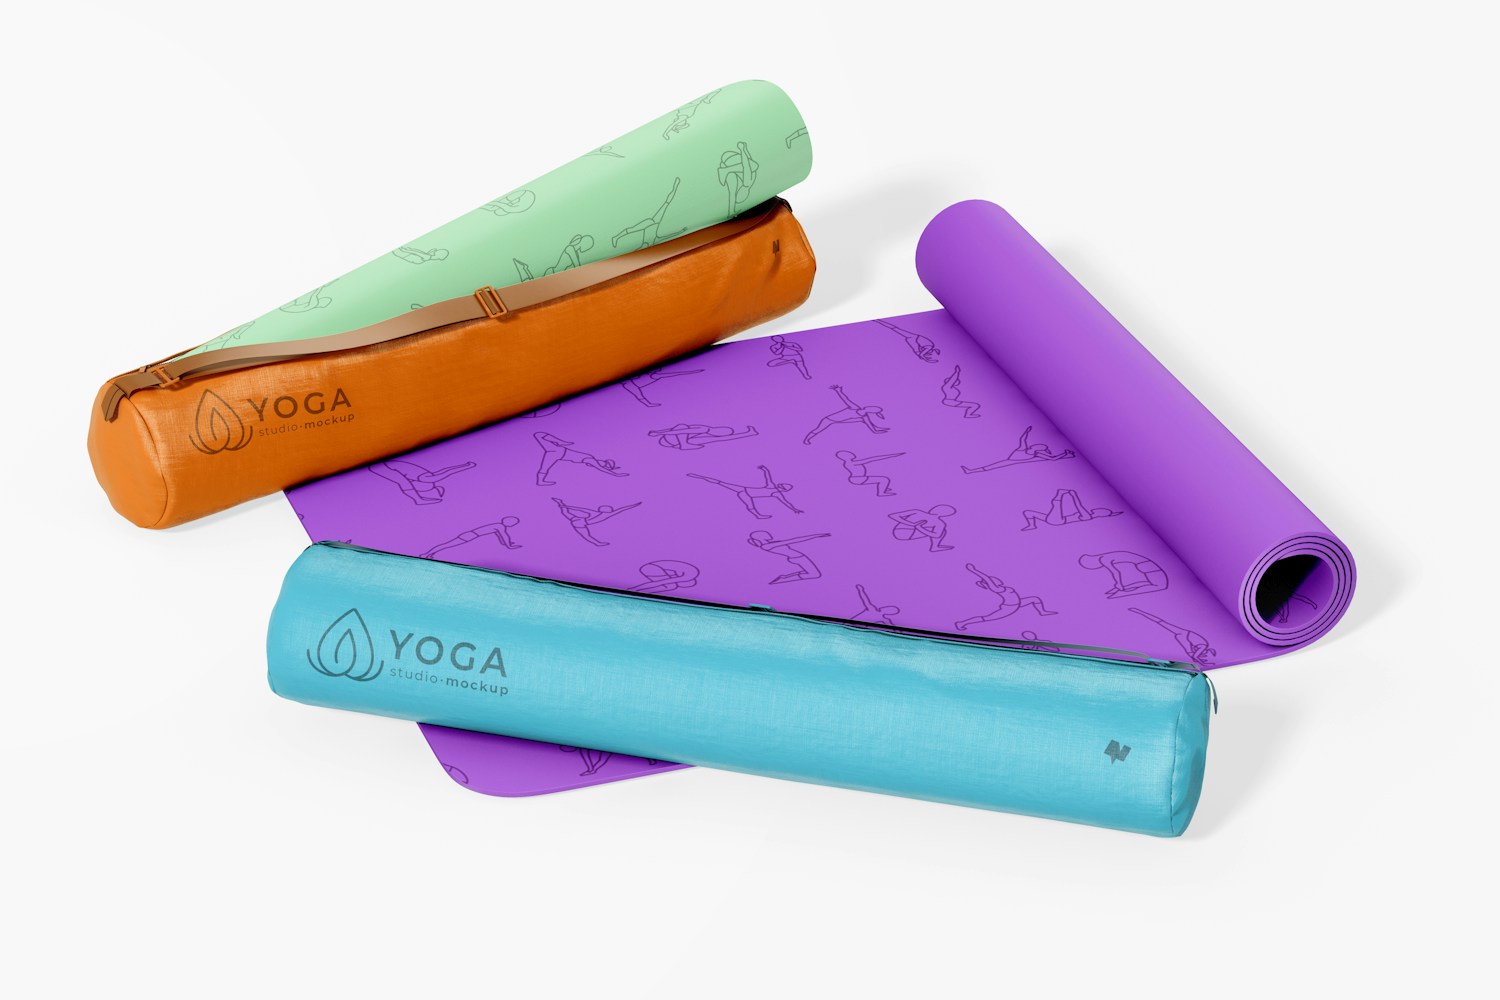 Yoga Mat Cover Mockup